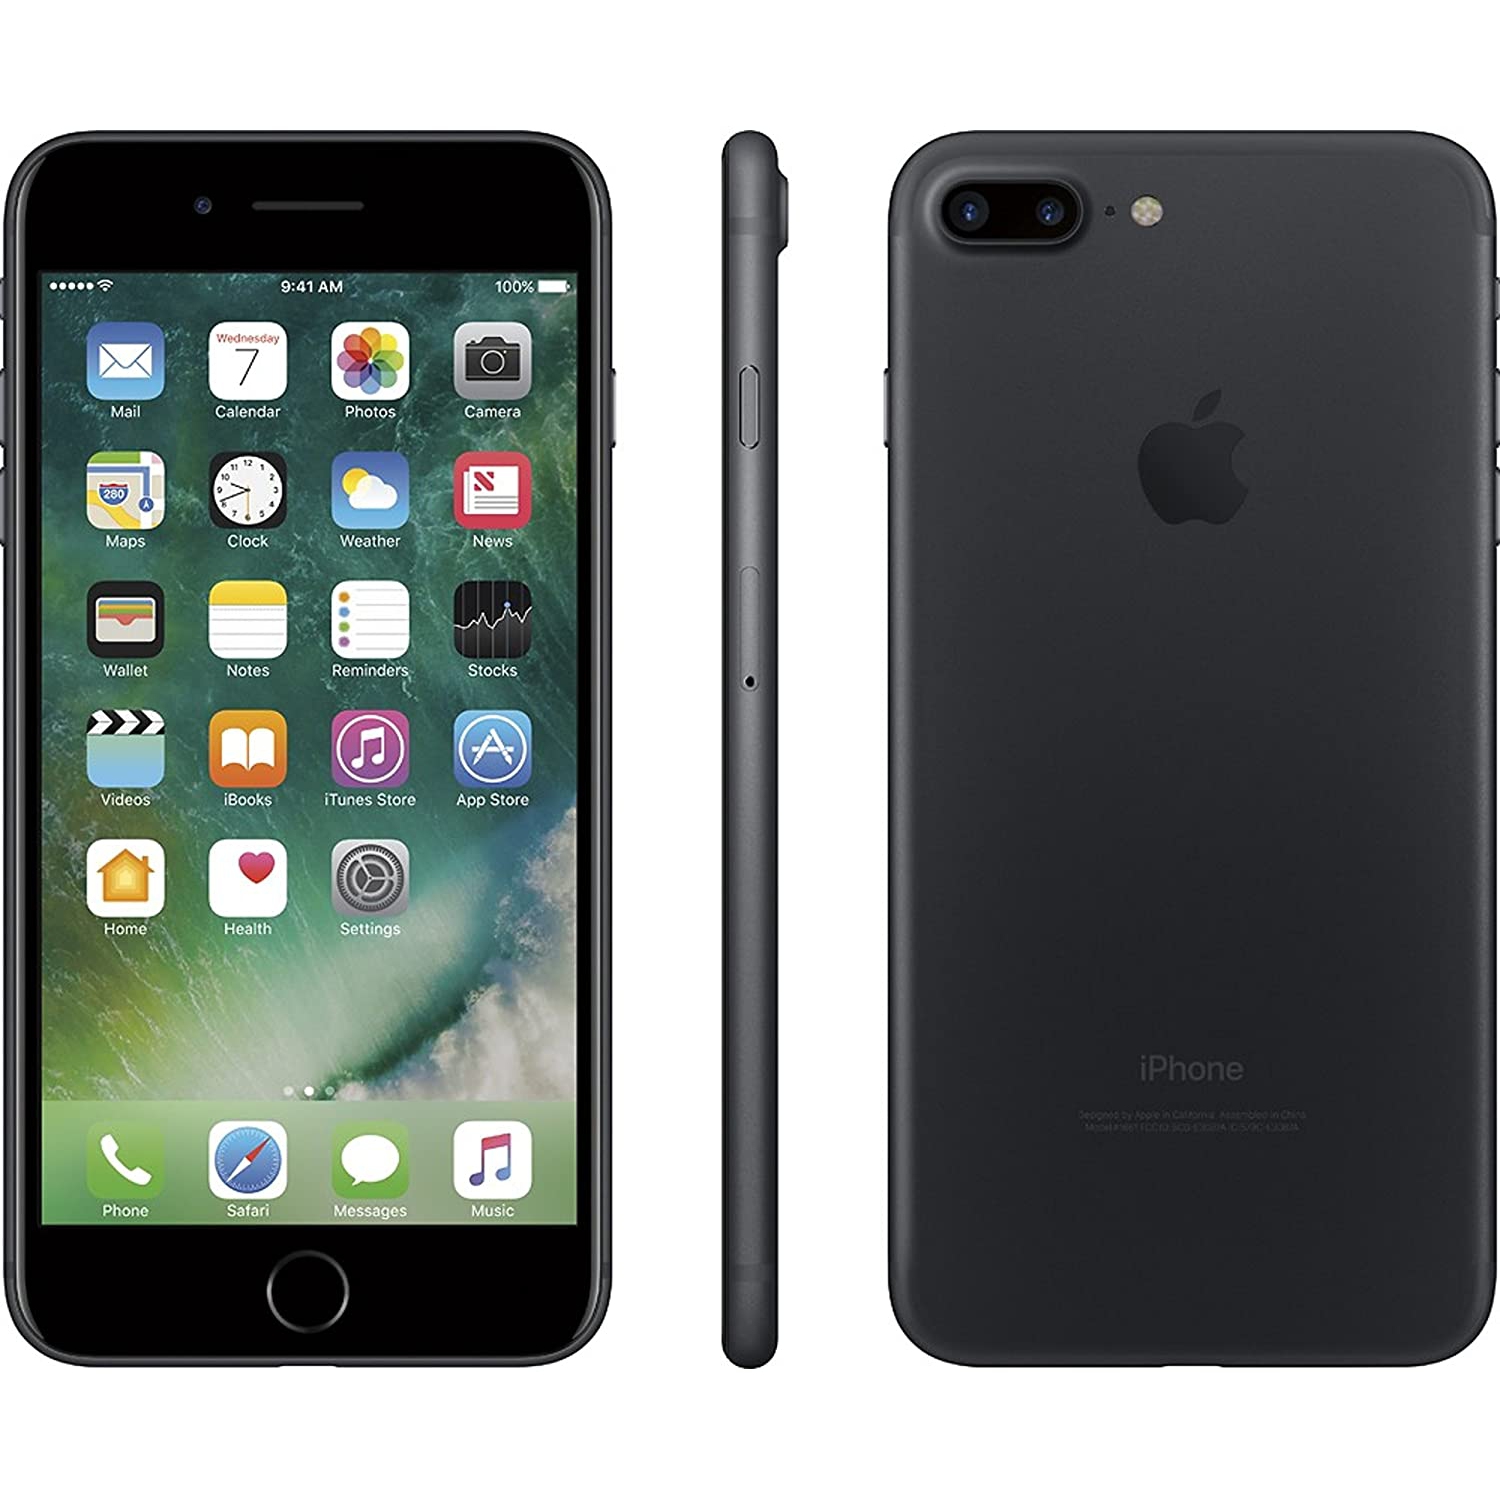 Apple iPhone 7 Plus 32GB - GSM Unlocked Smartphone - Black - International Model - Open Box